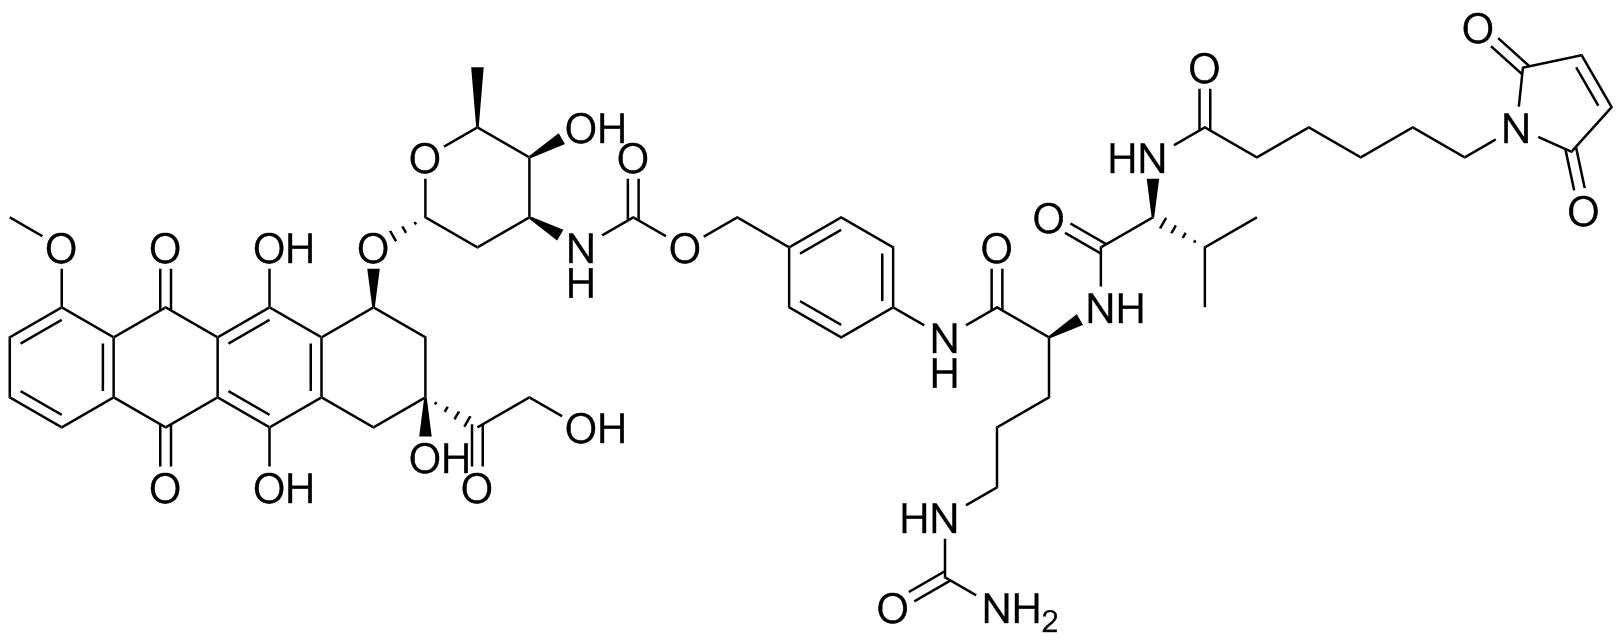 MC-Val-Cit-PAB-Doxorubicin